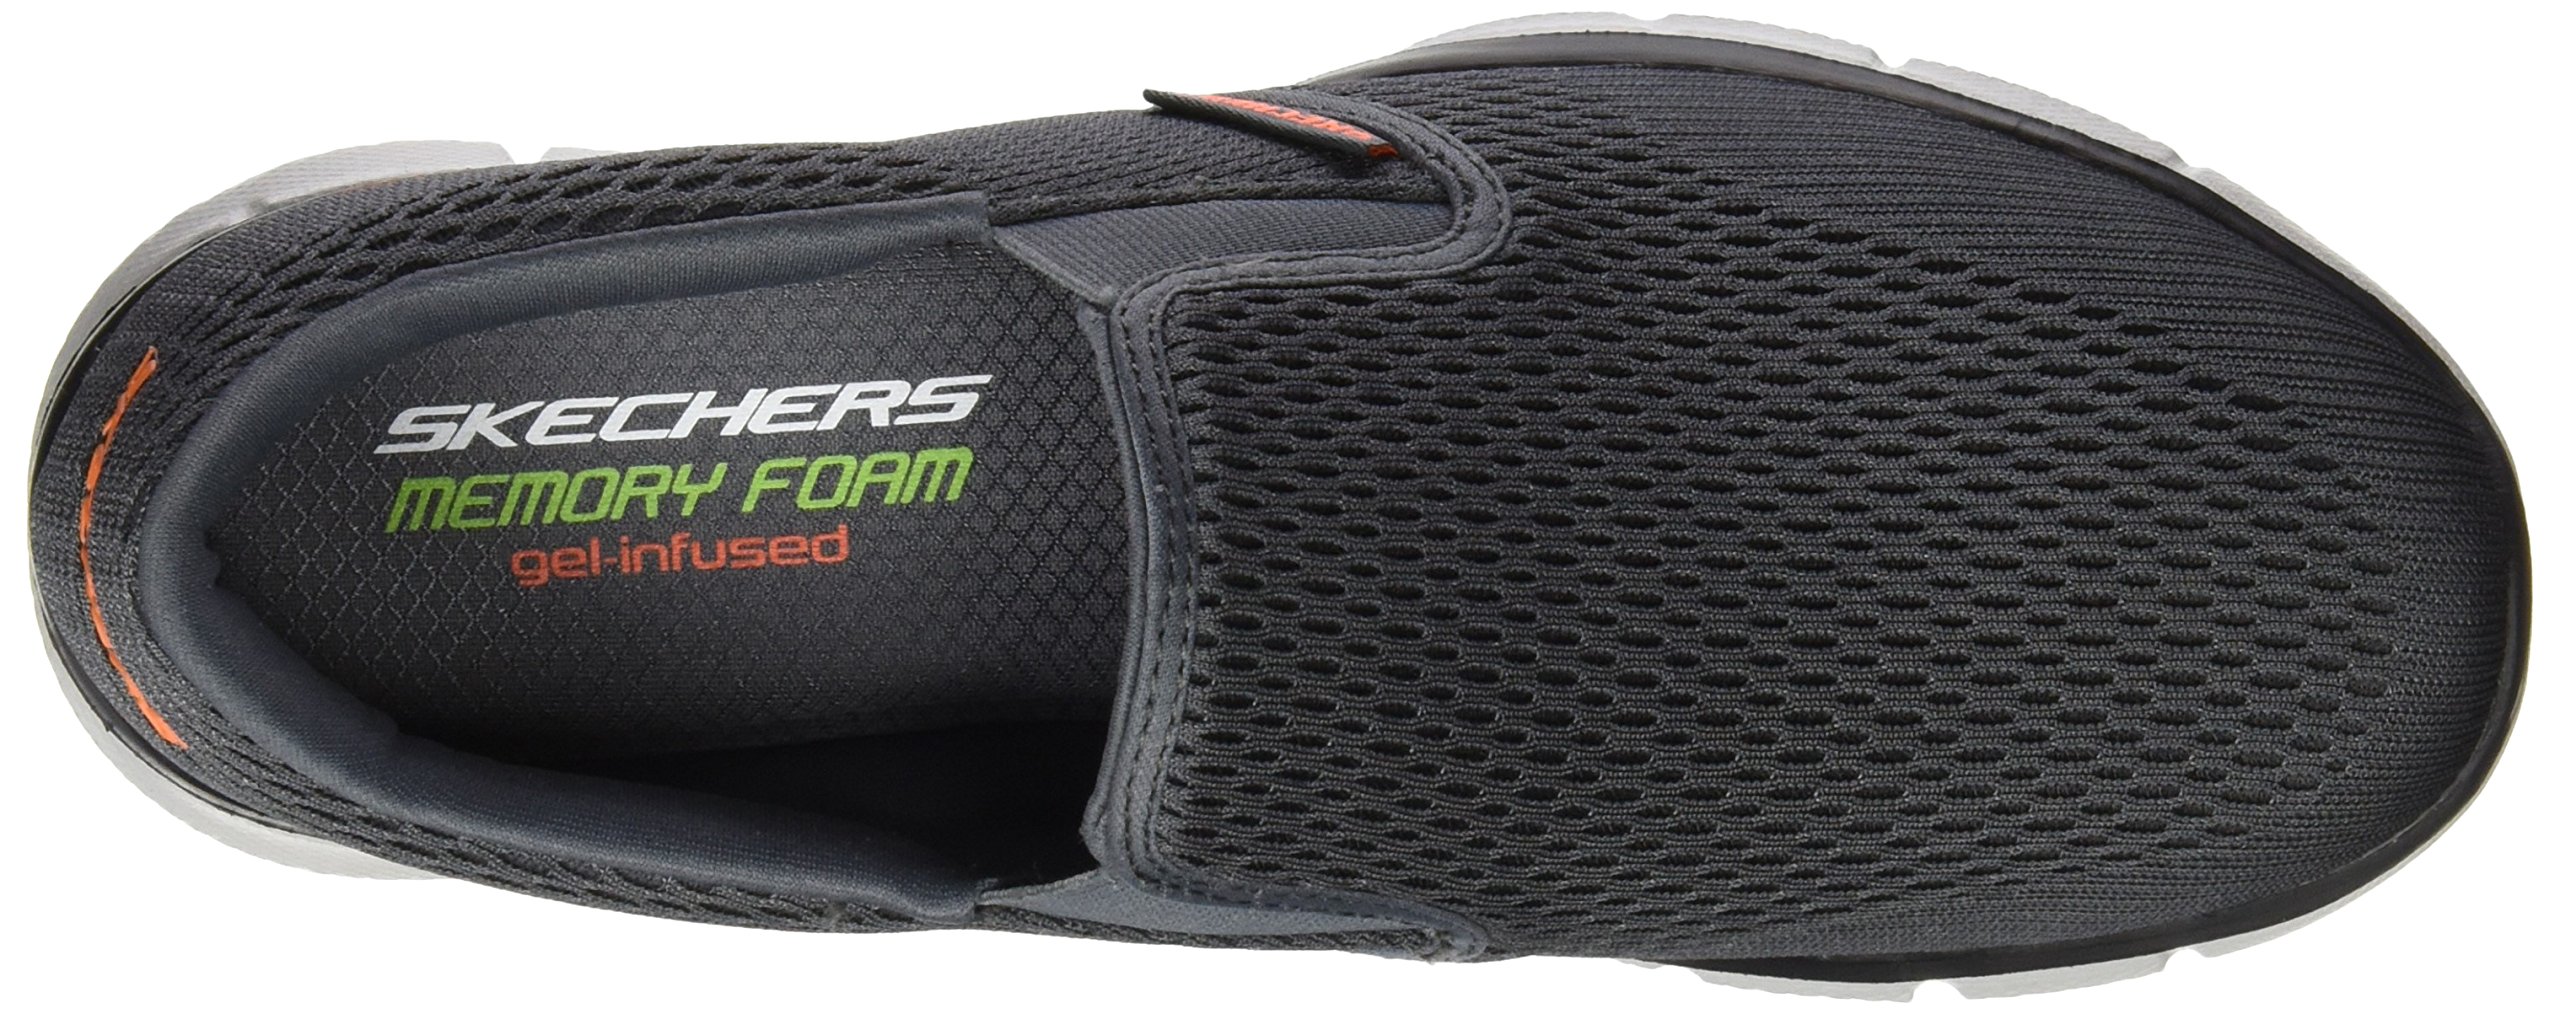 Skechers Men's Equalizer Double Play Slip-On Loafer